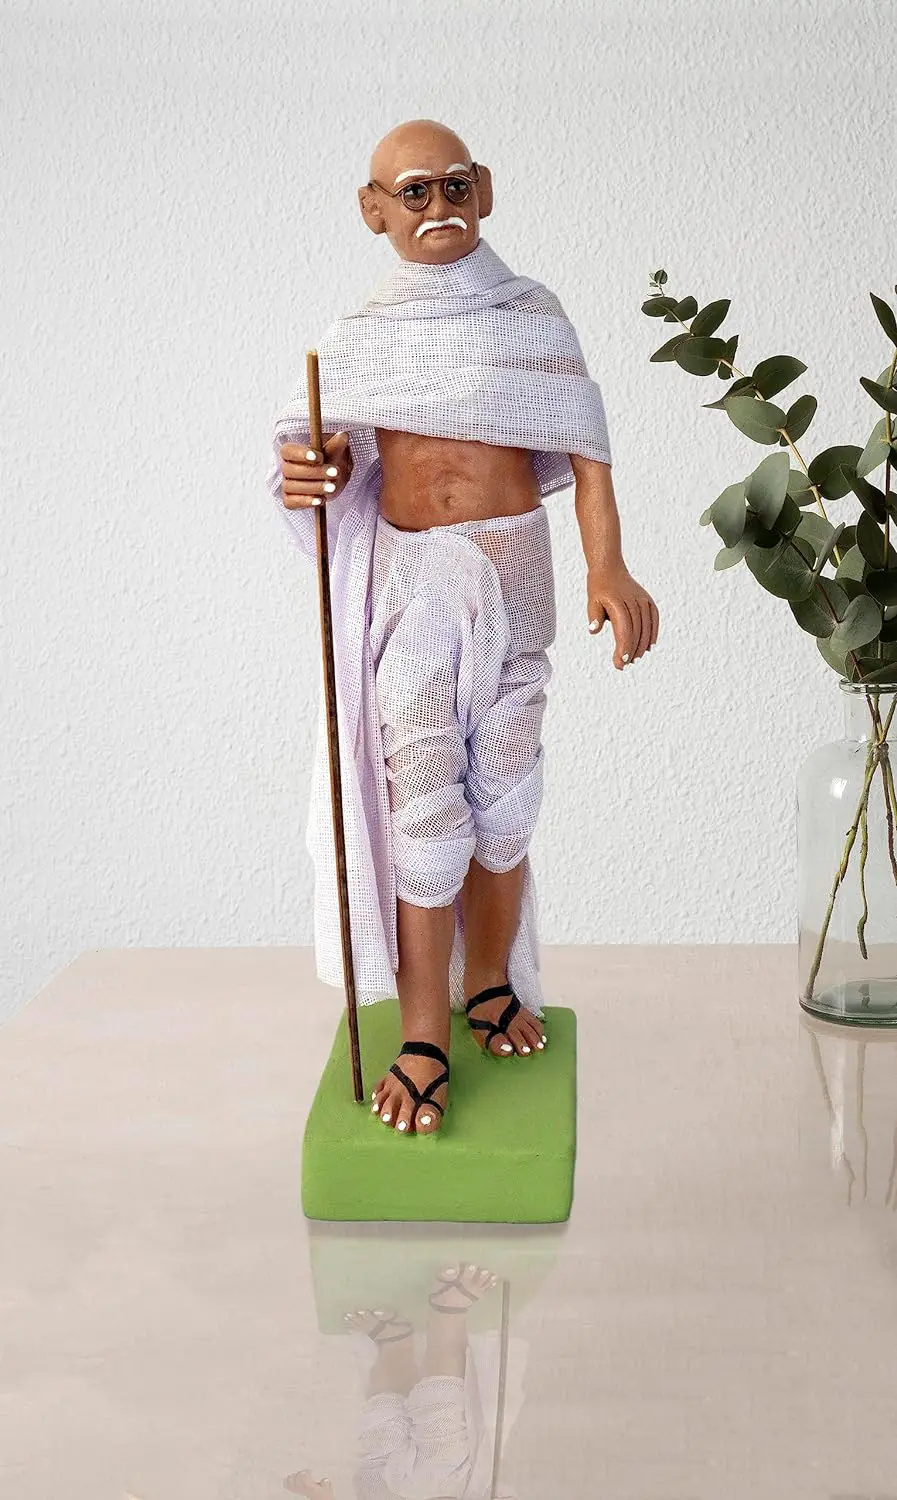 Handmade-Clay-Human-Figure-Gift-Decor-Mahatma-Gandhi